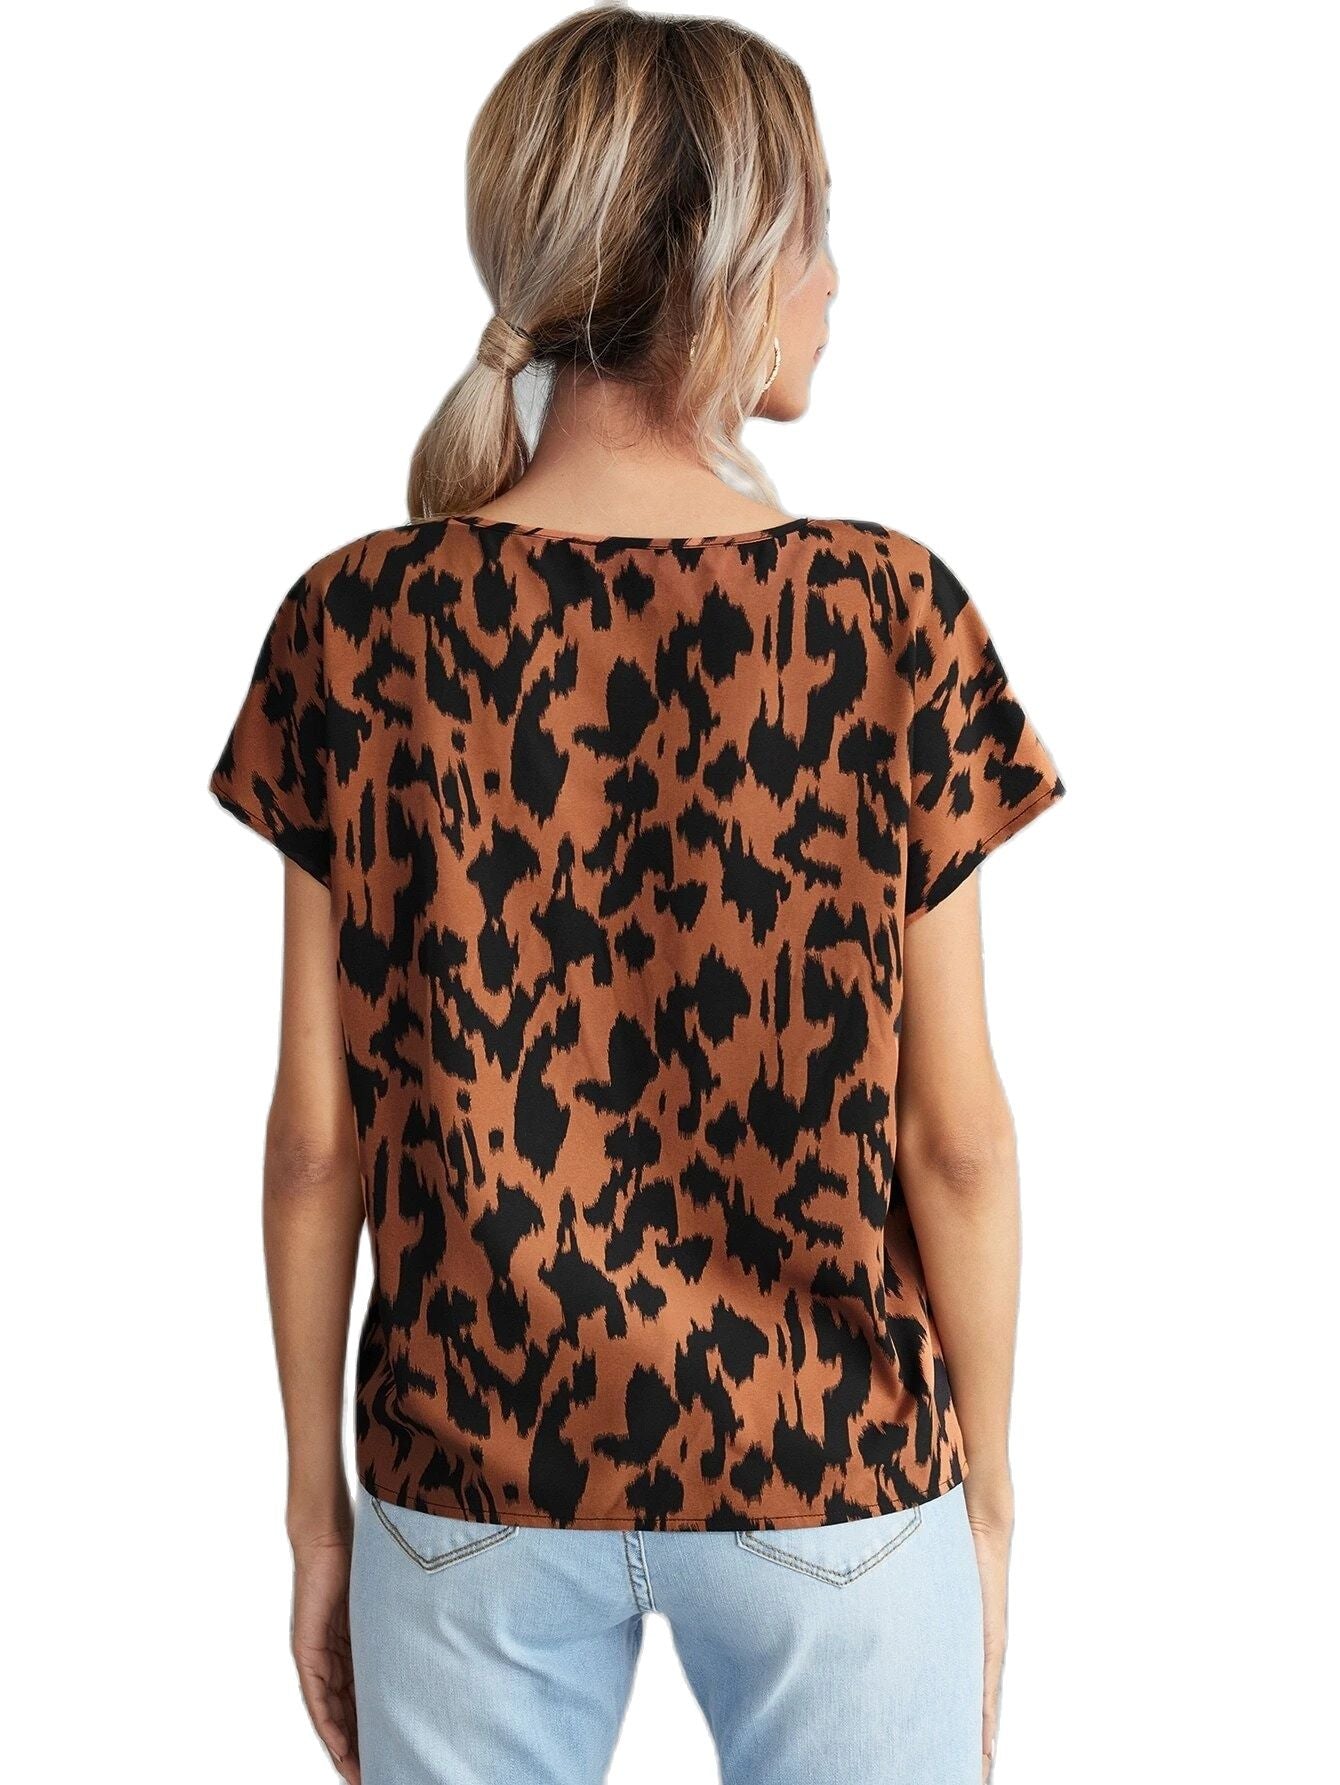 Leopard Fashion Top